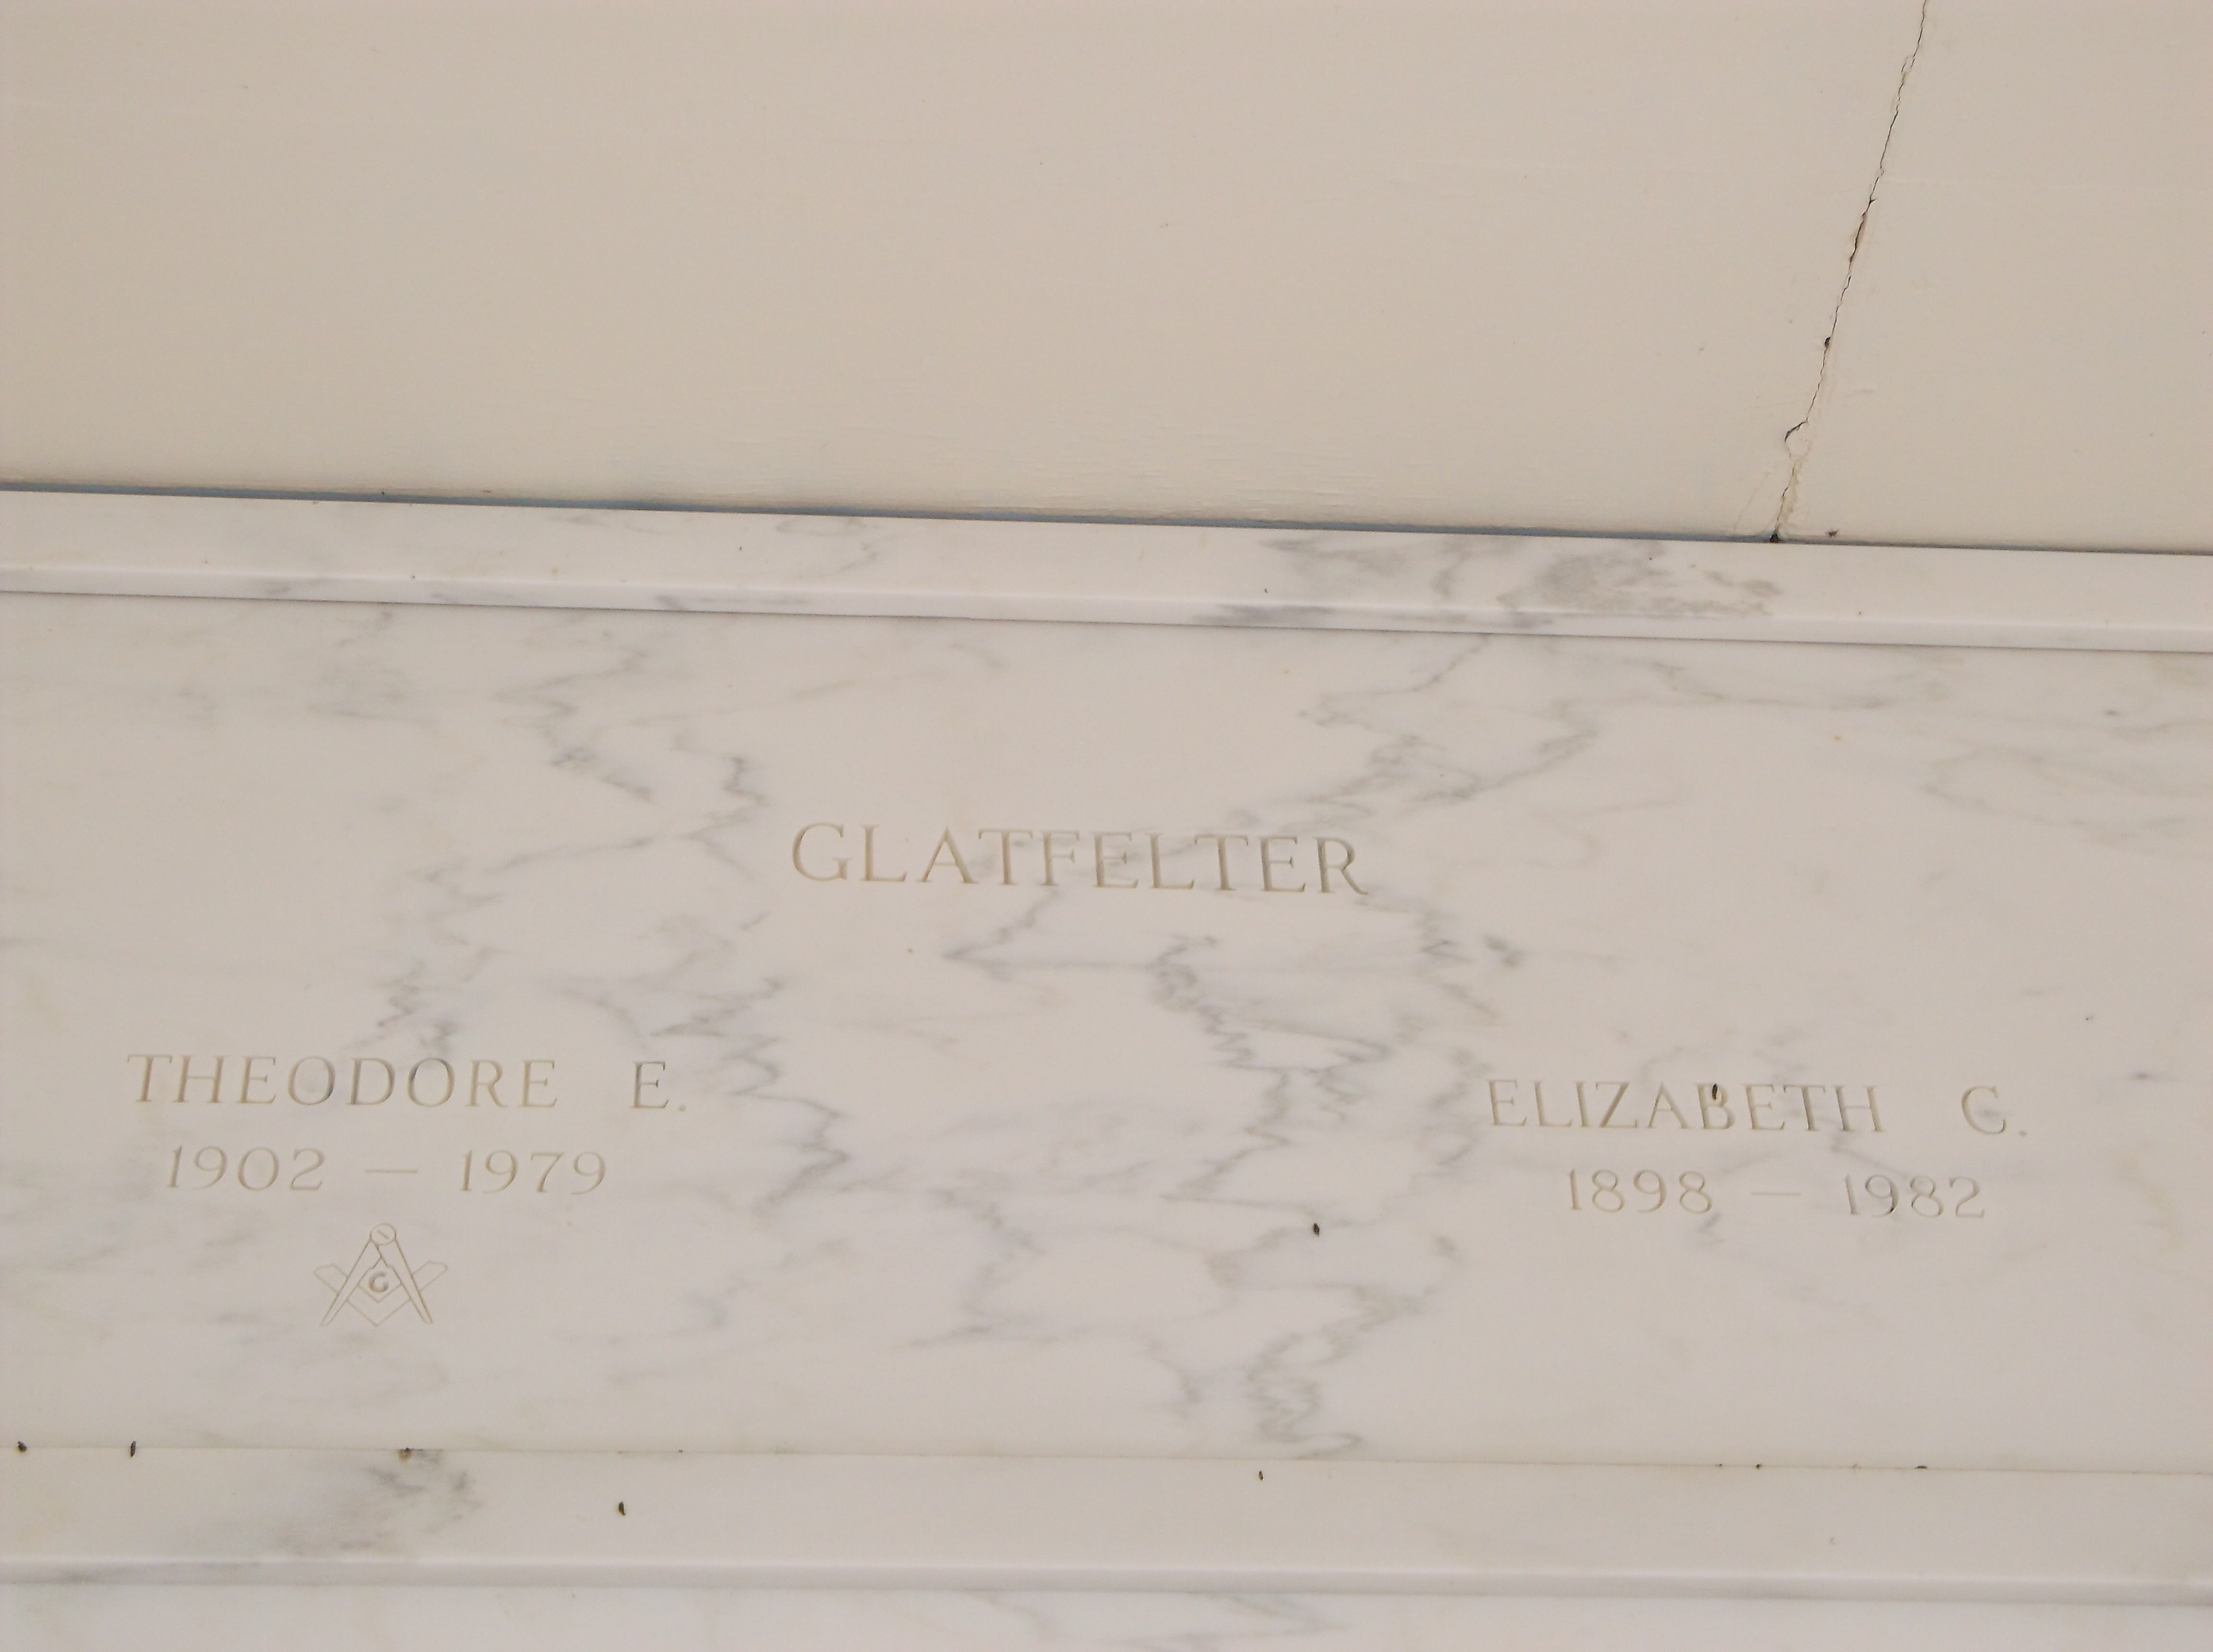 Theodore E Glatfelter